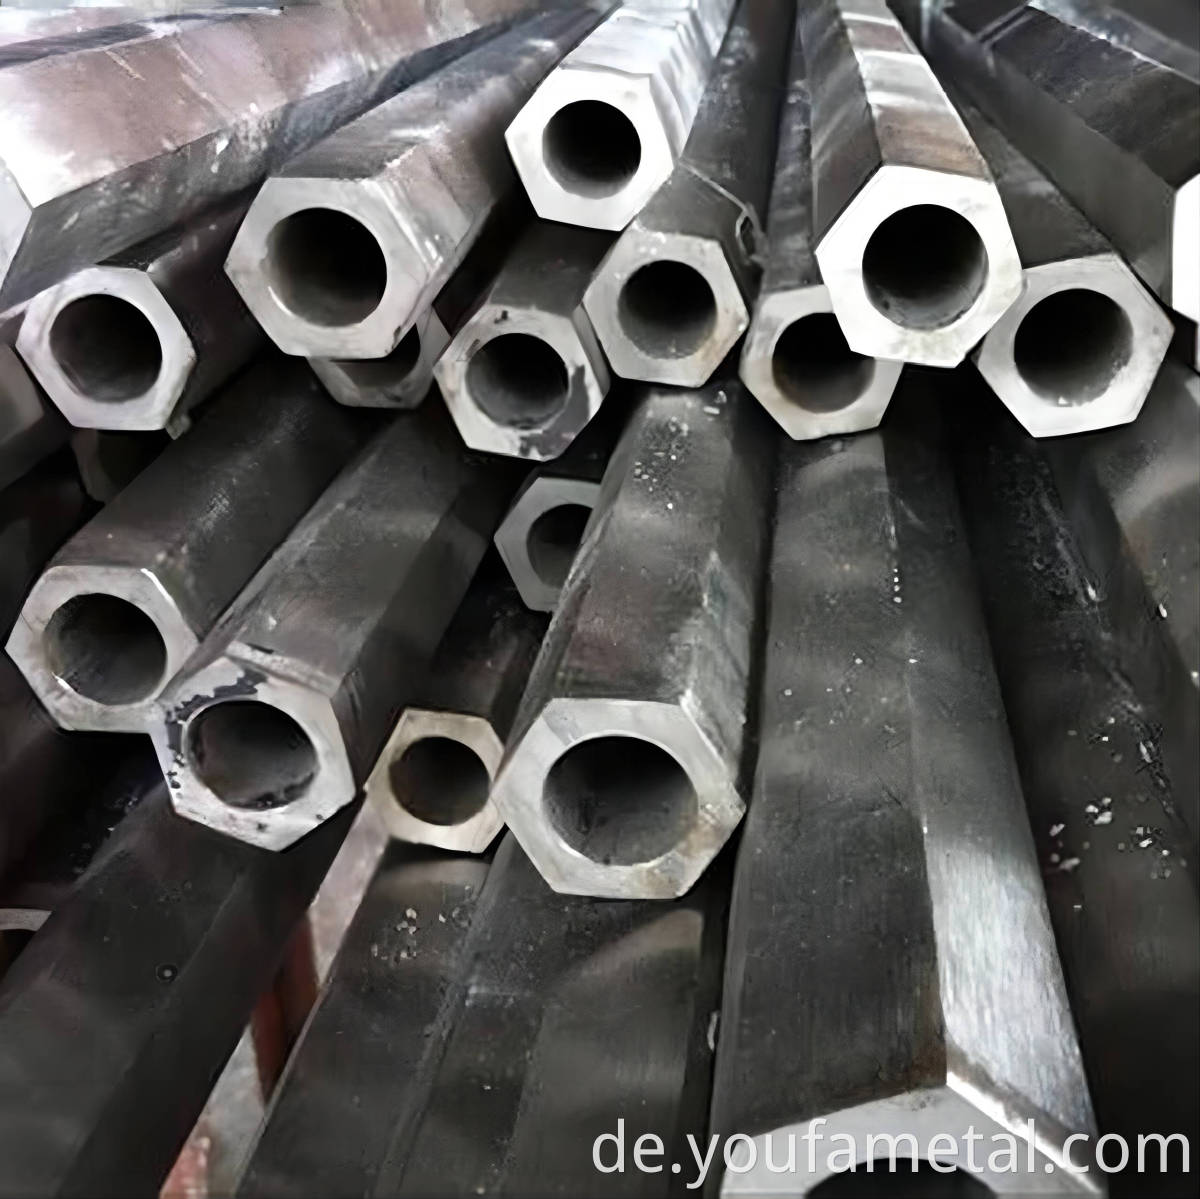 Hexagonal steel pipe